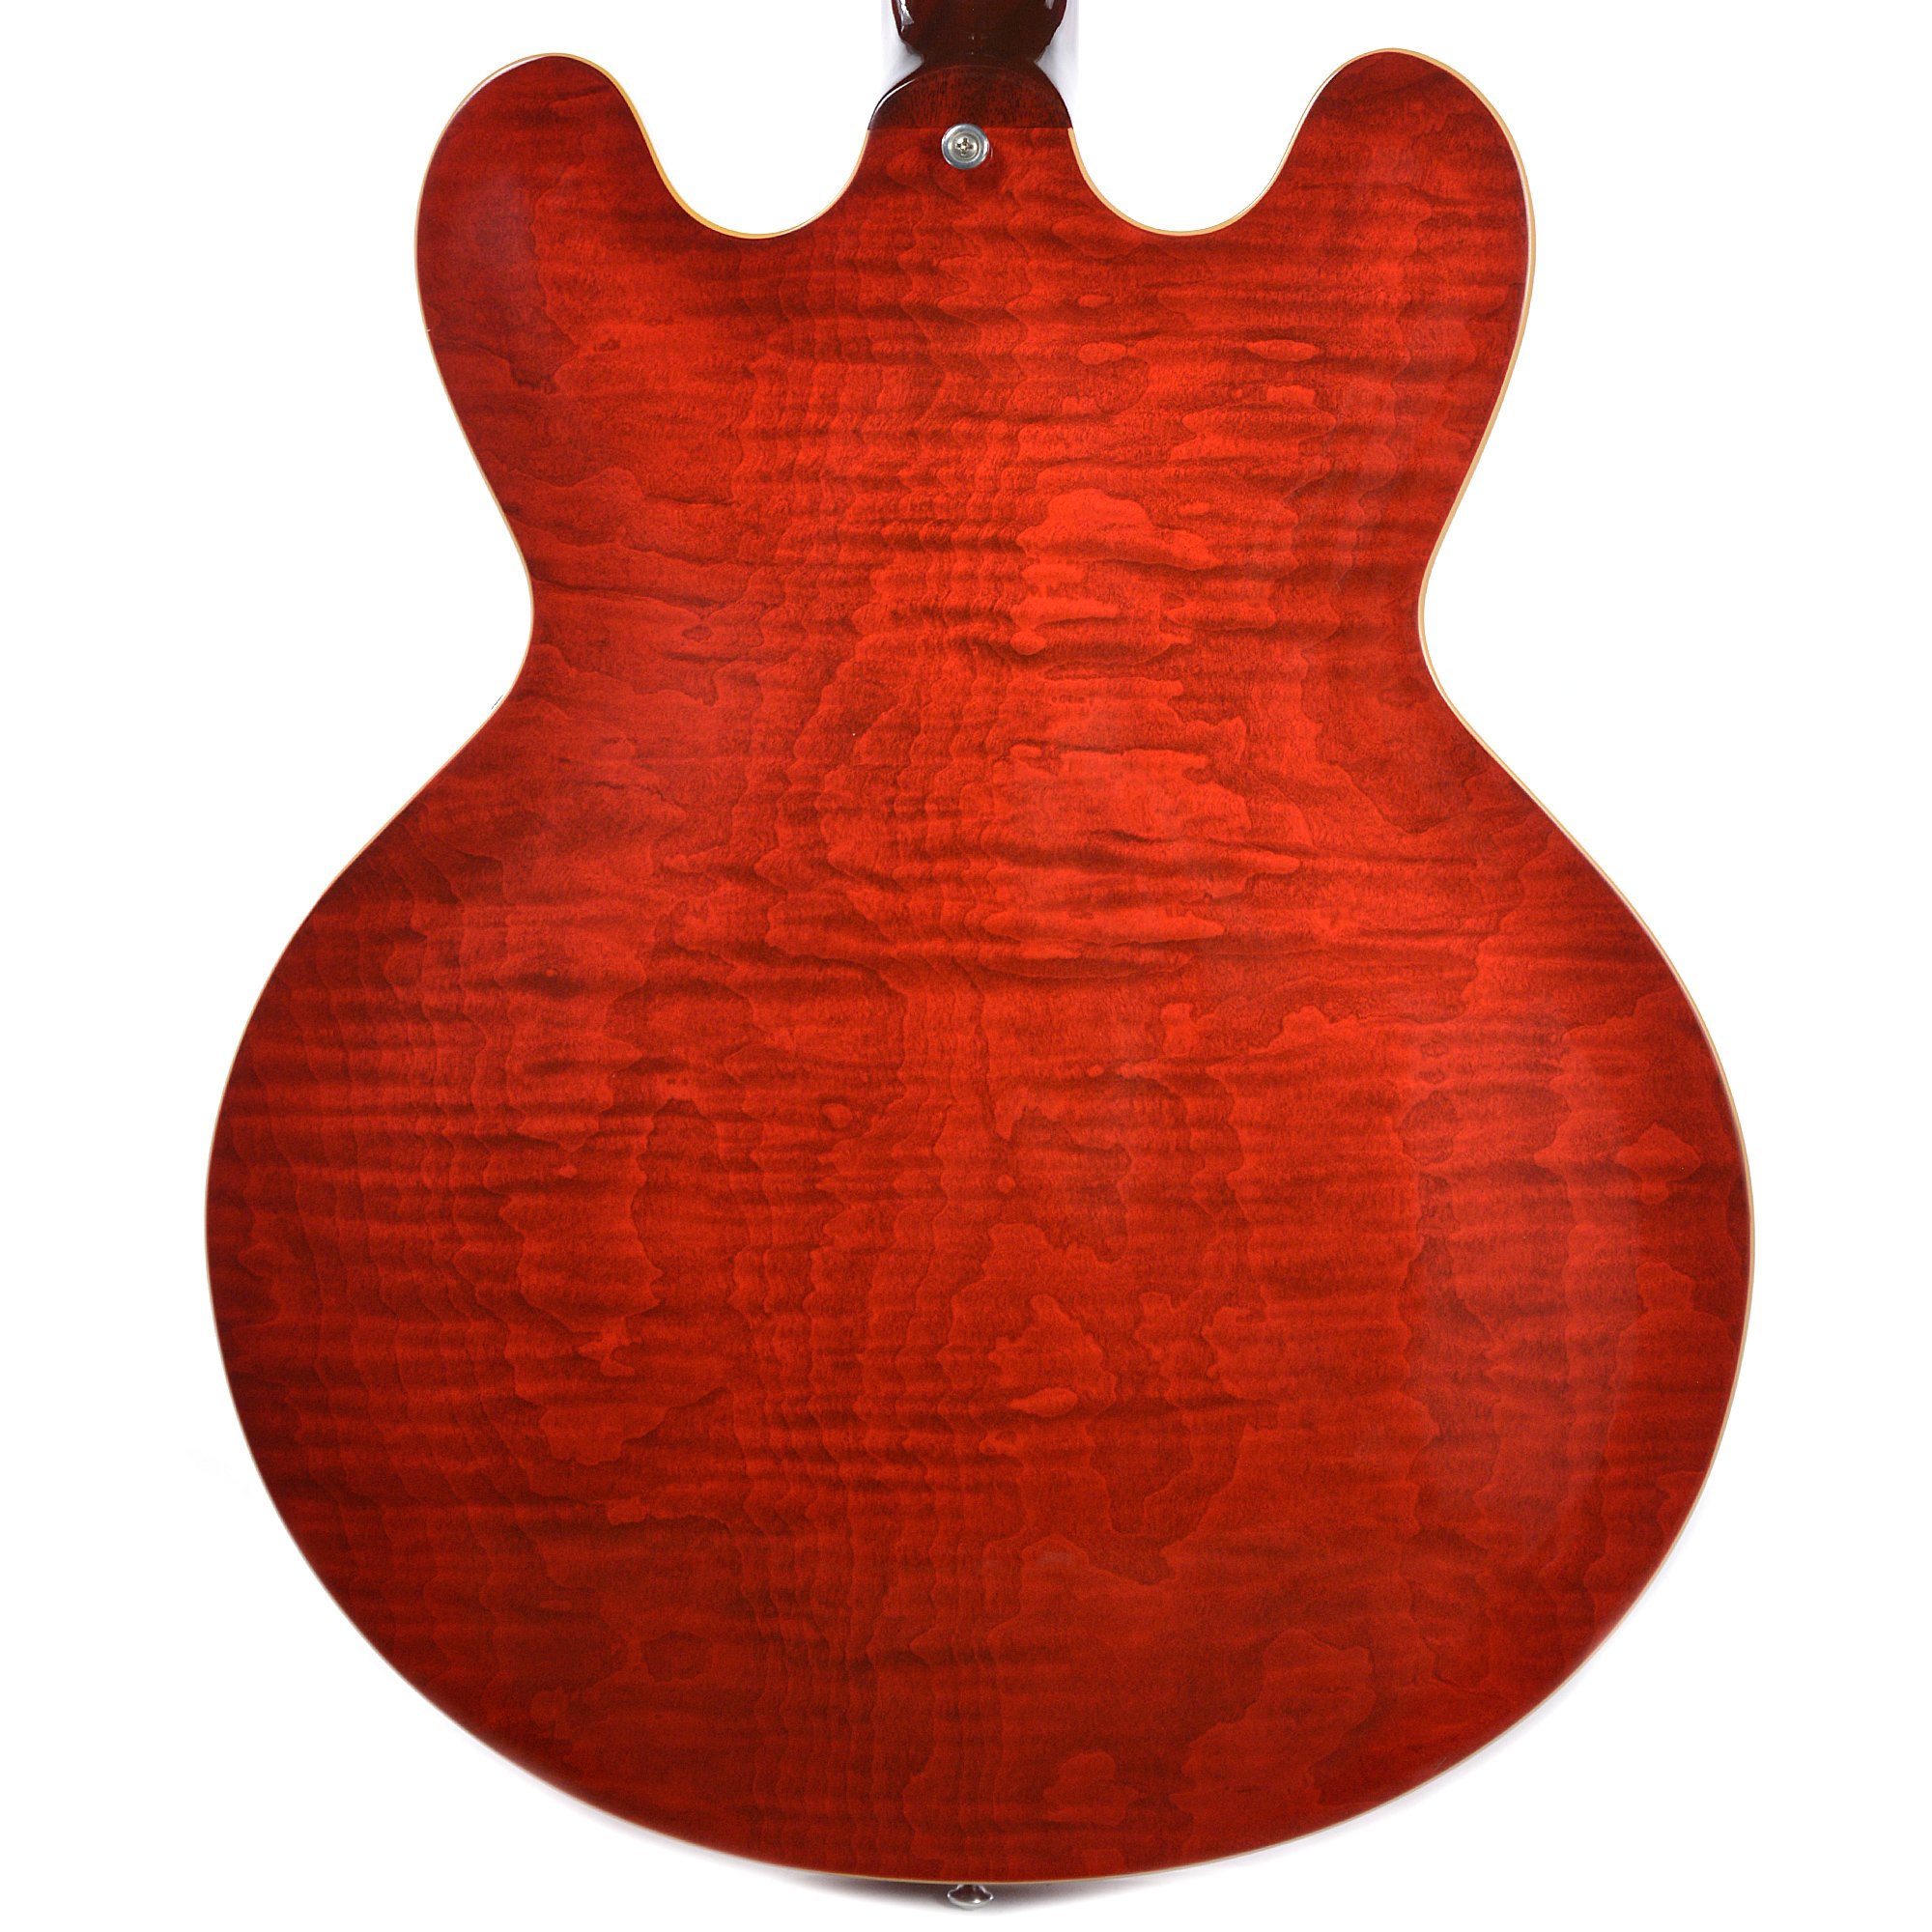 Gibson Es-335 Figured 2018 Ltd - Antique Sixties Cherry - Semi-hollow electric guitar - Variation 3